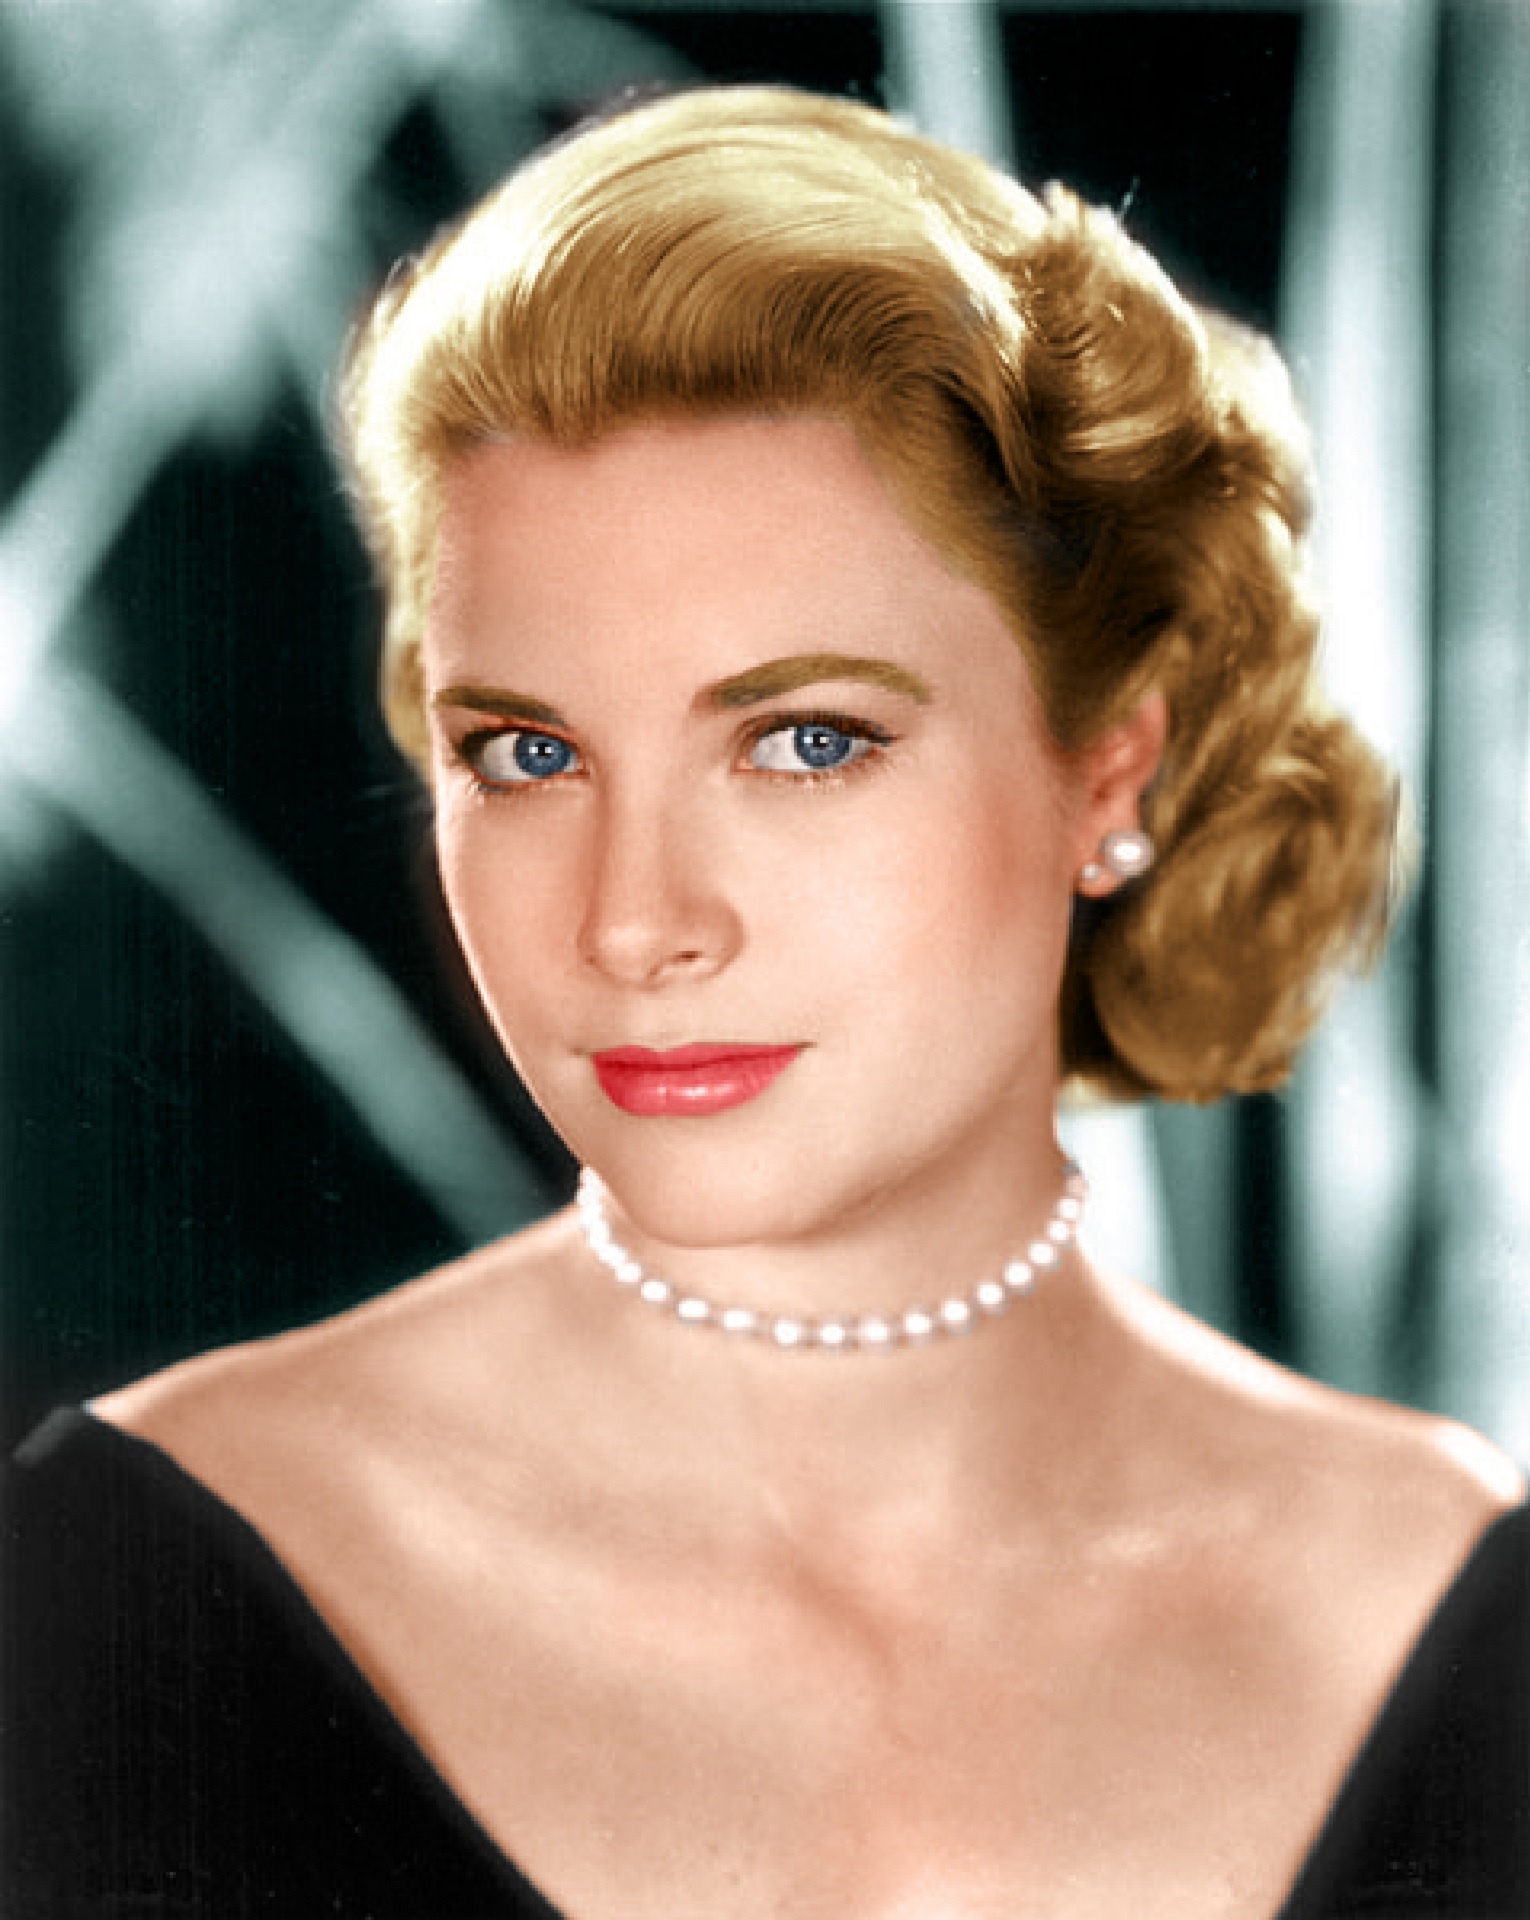 Portrait of the Princess of Monaco